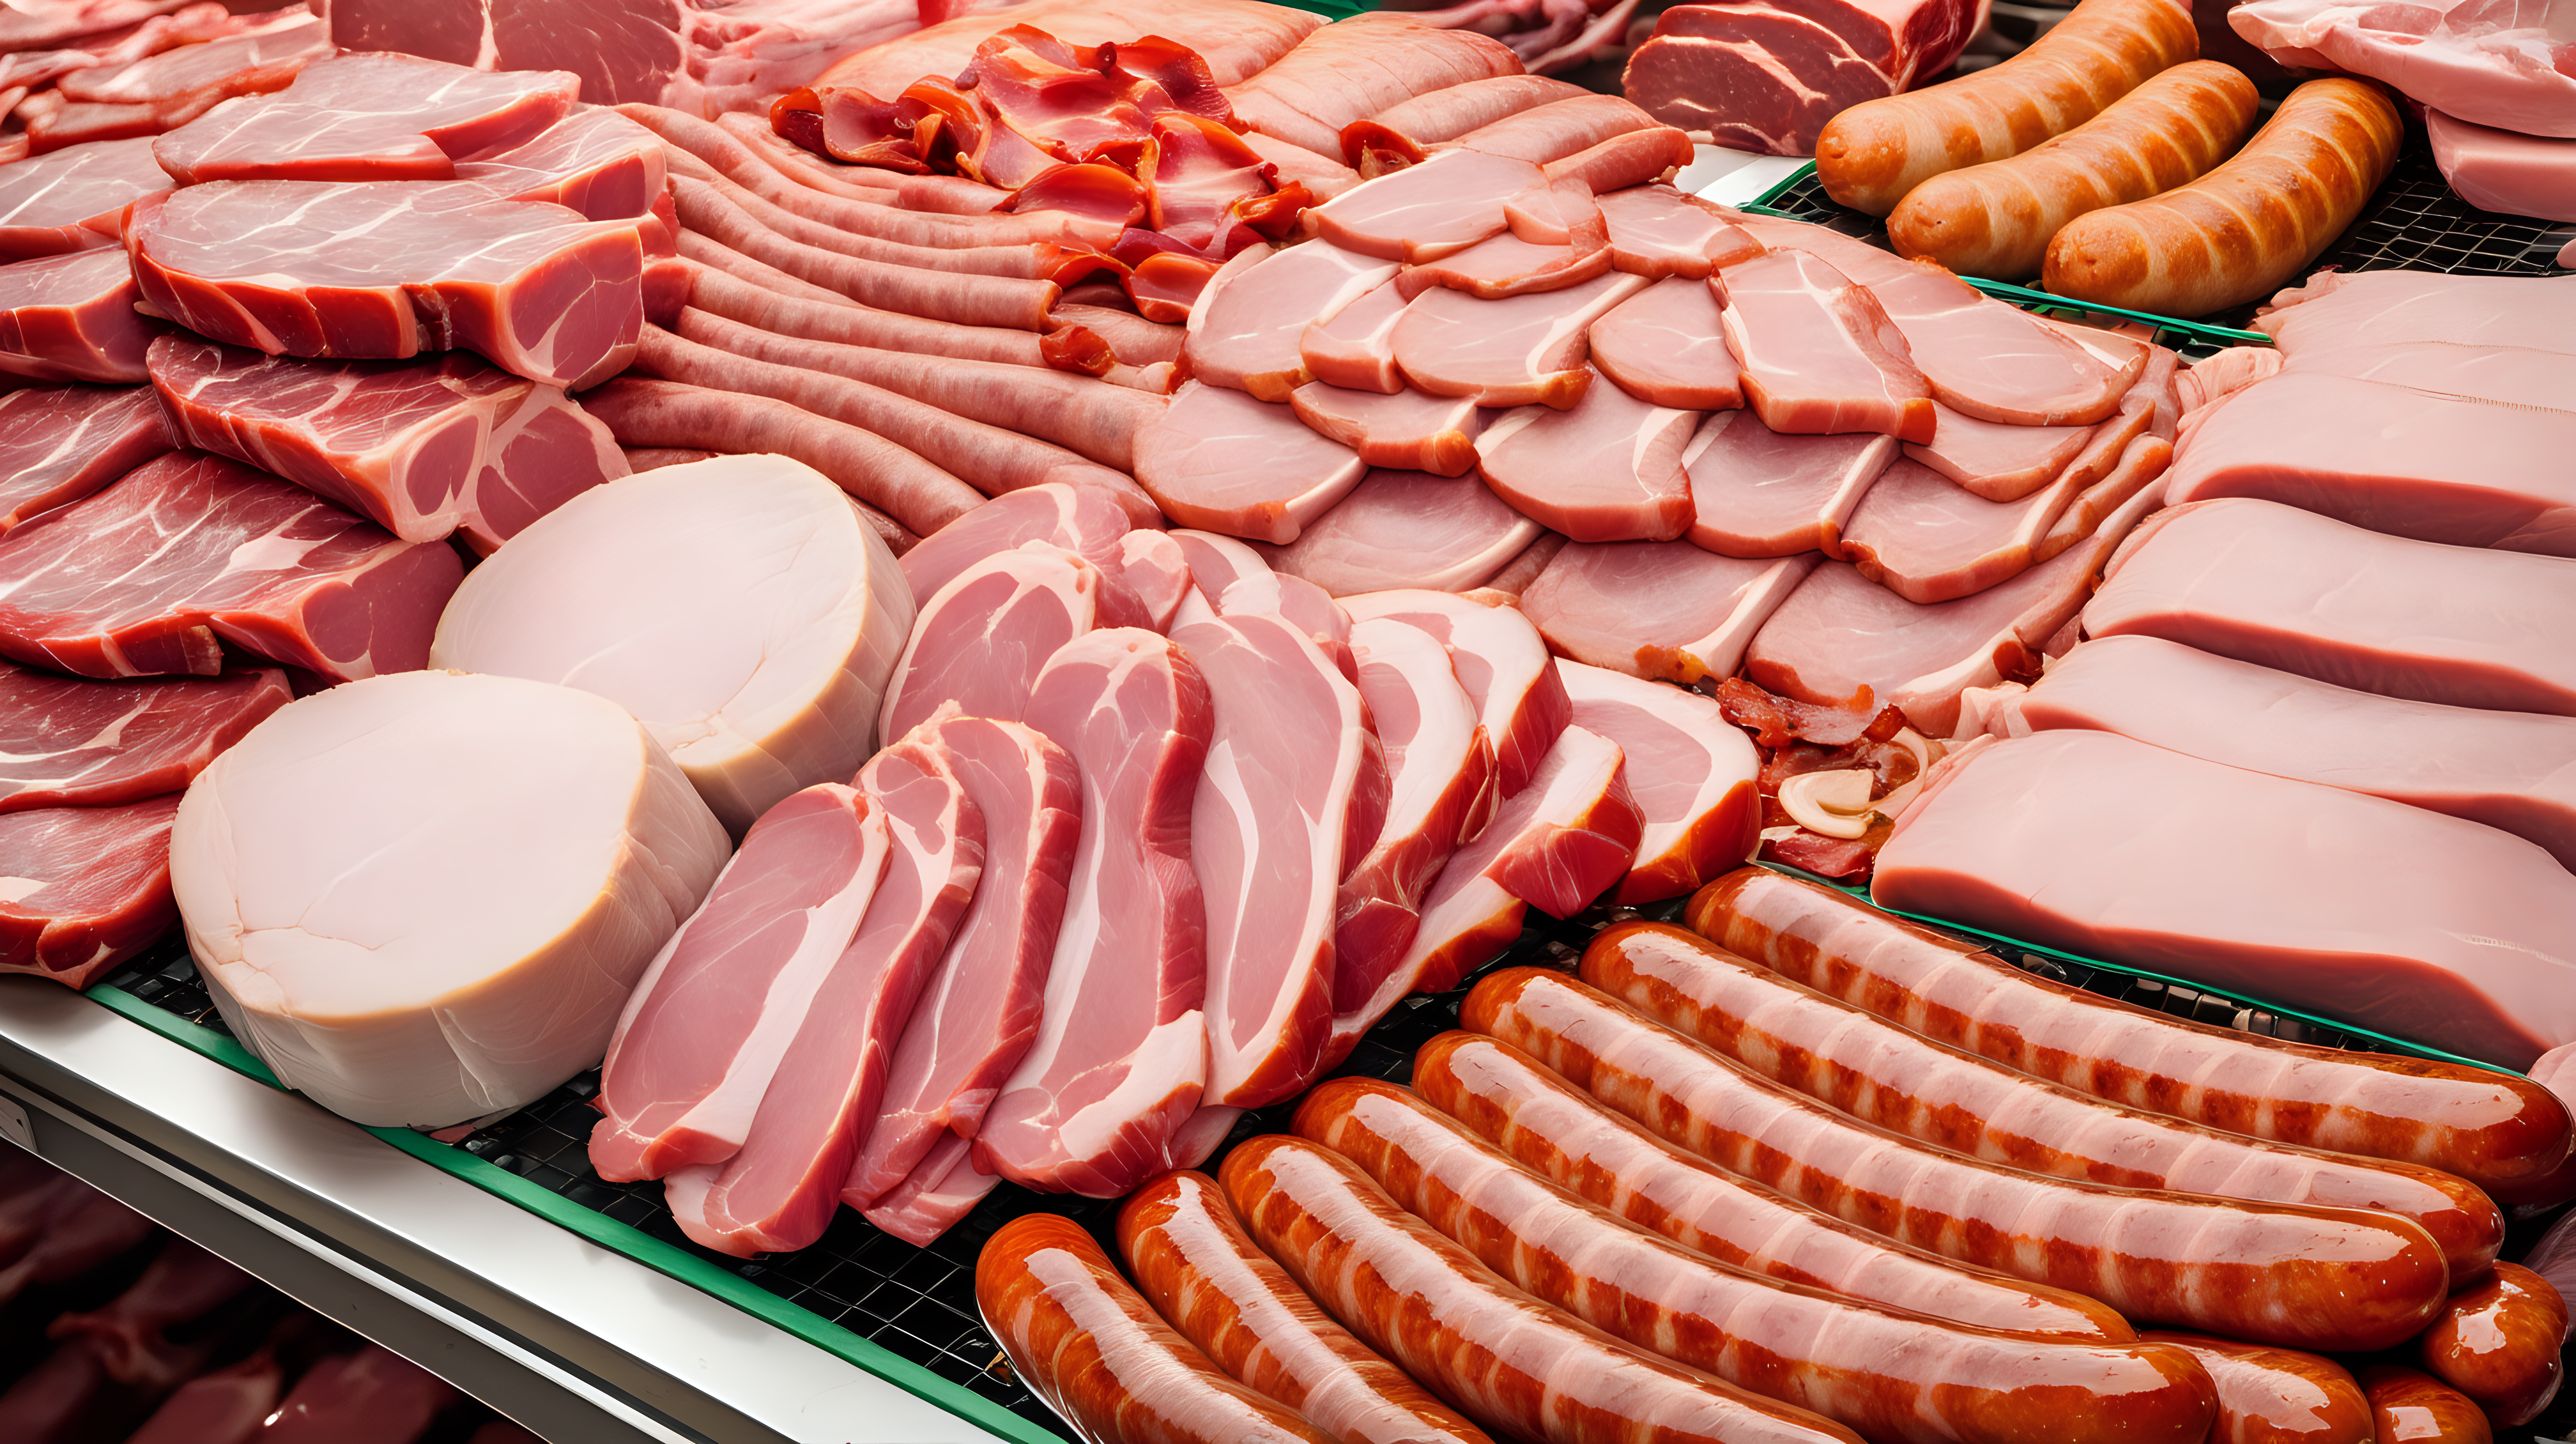 Ham bacon pork chops pork loin and sausage